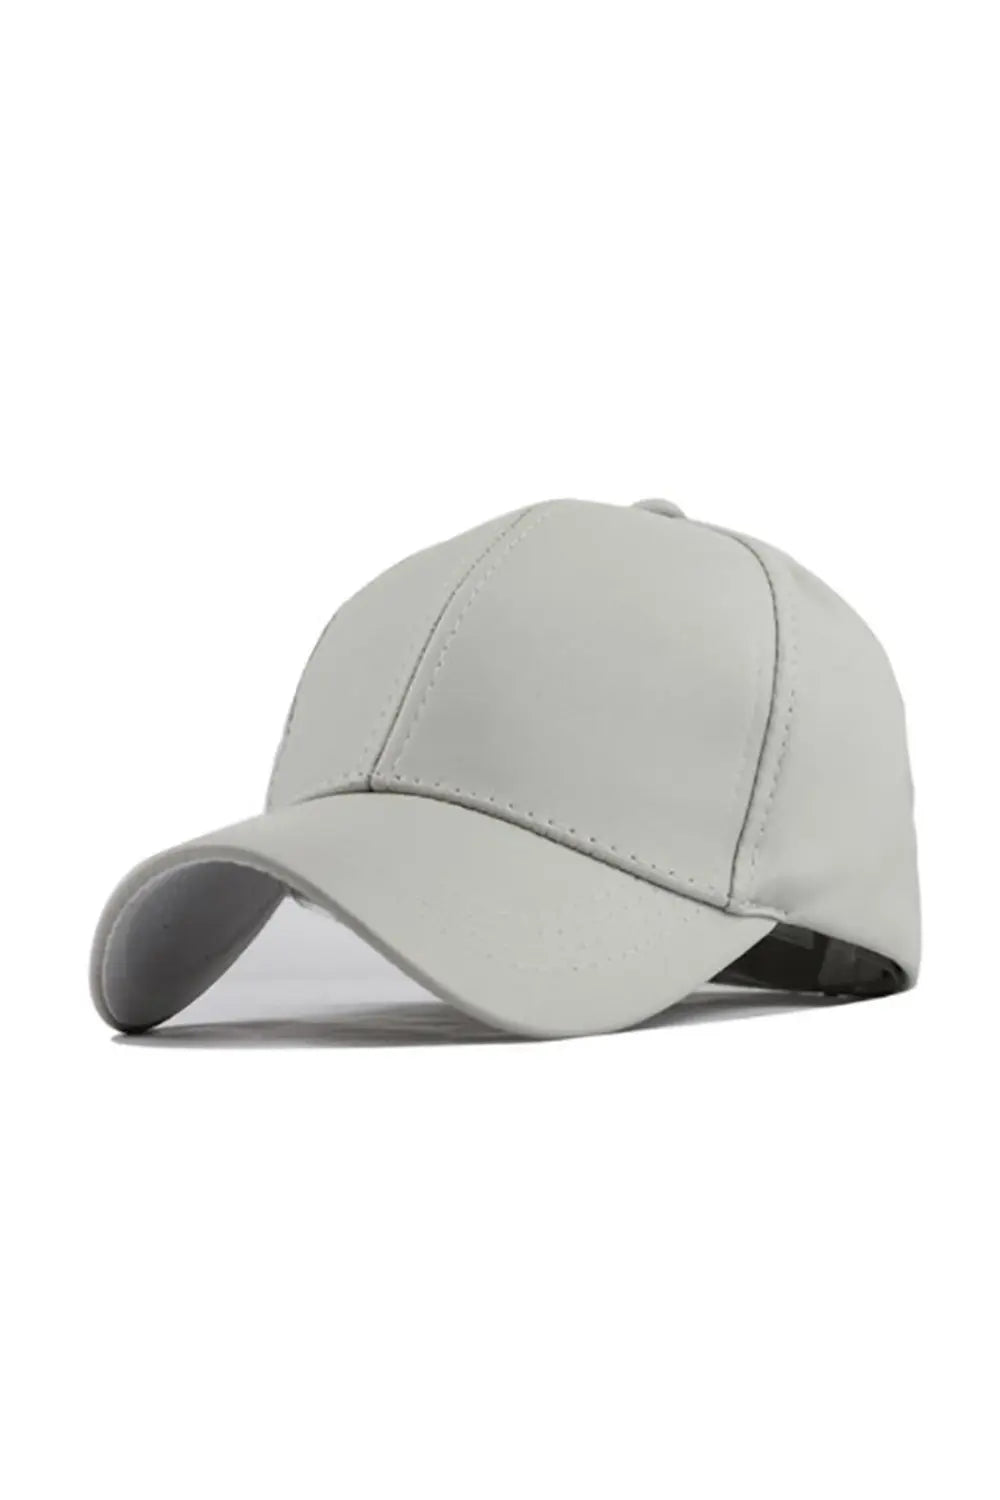 Leather Baseball Cap - Gray - Strange-Clothes